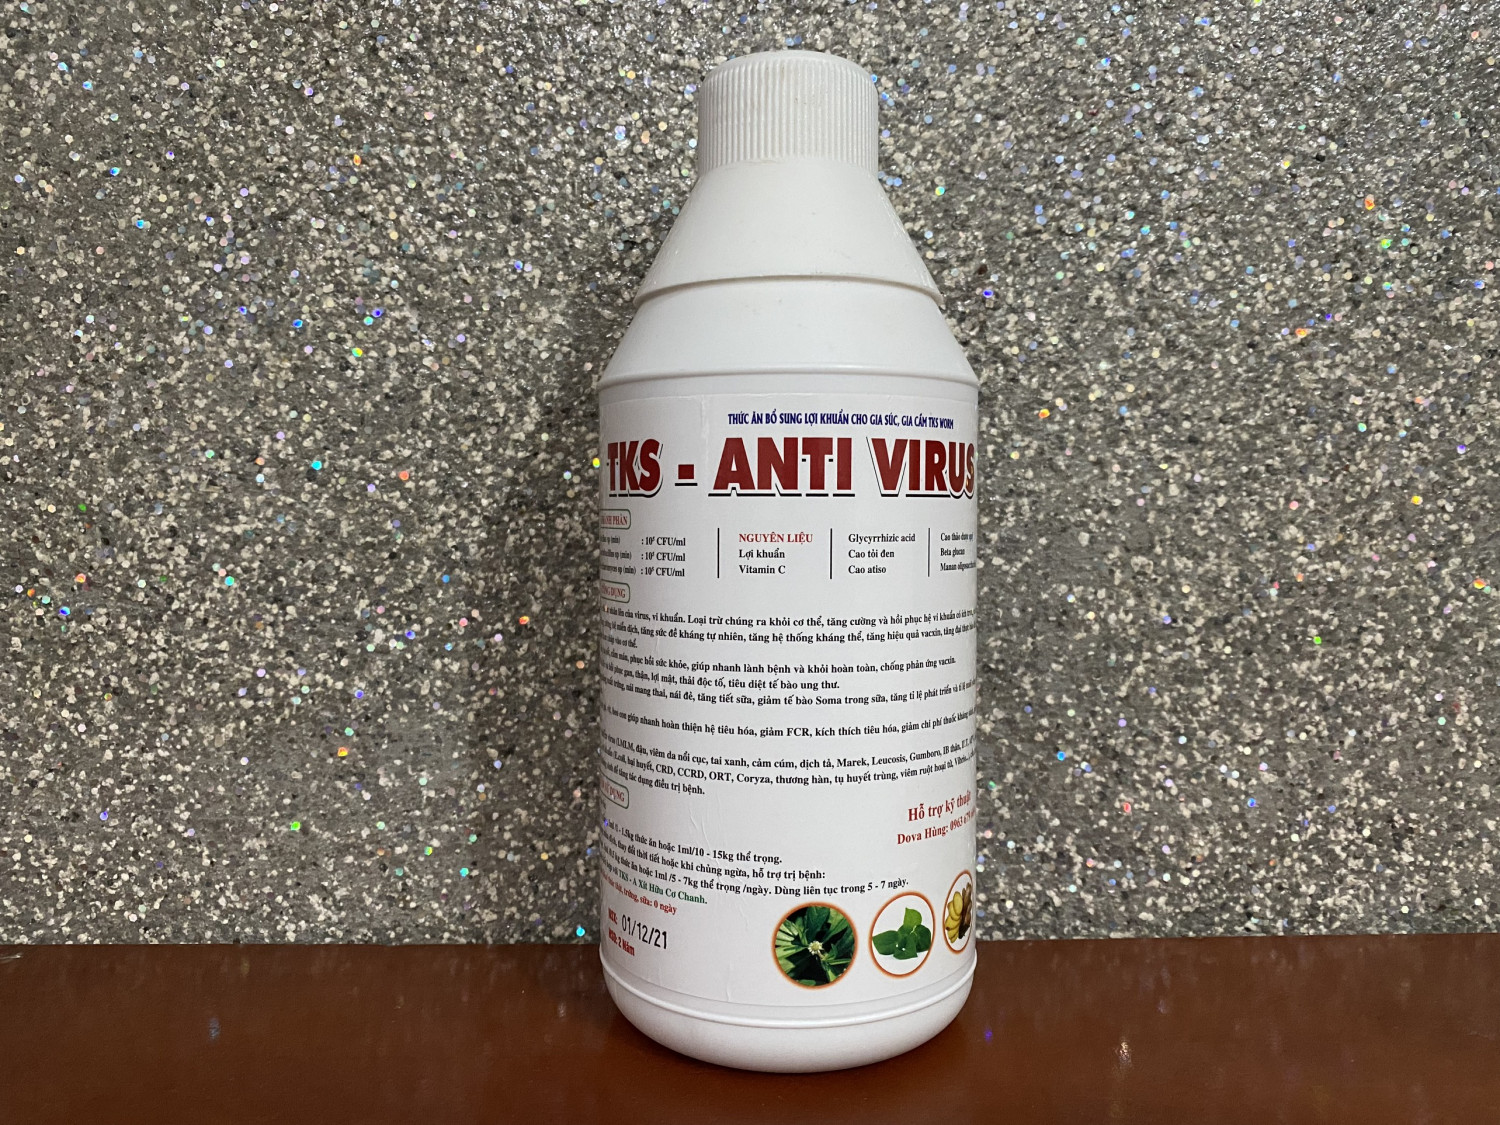 TKS Anti virus